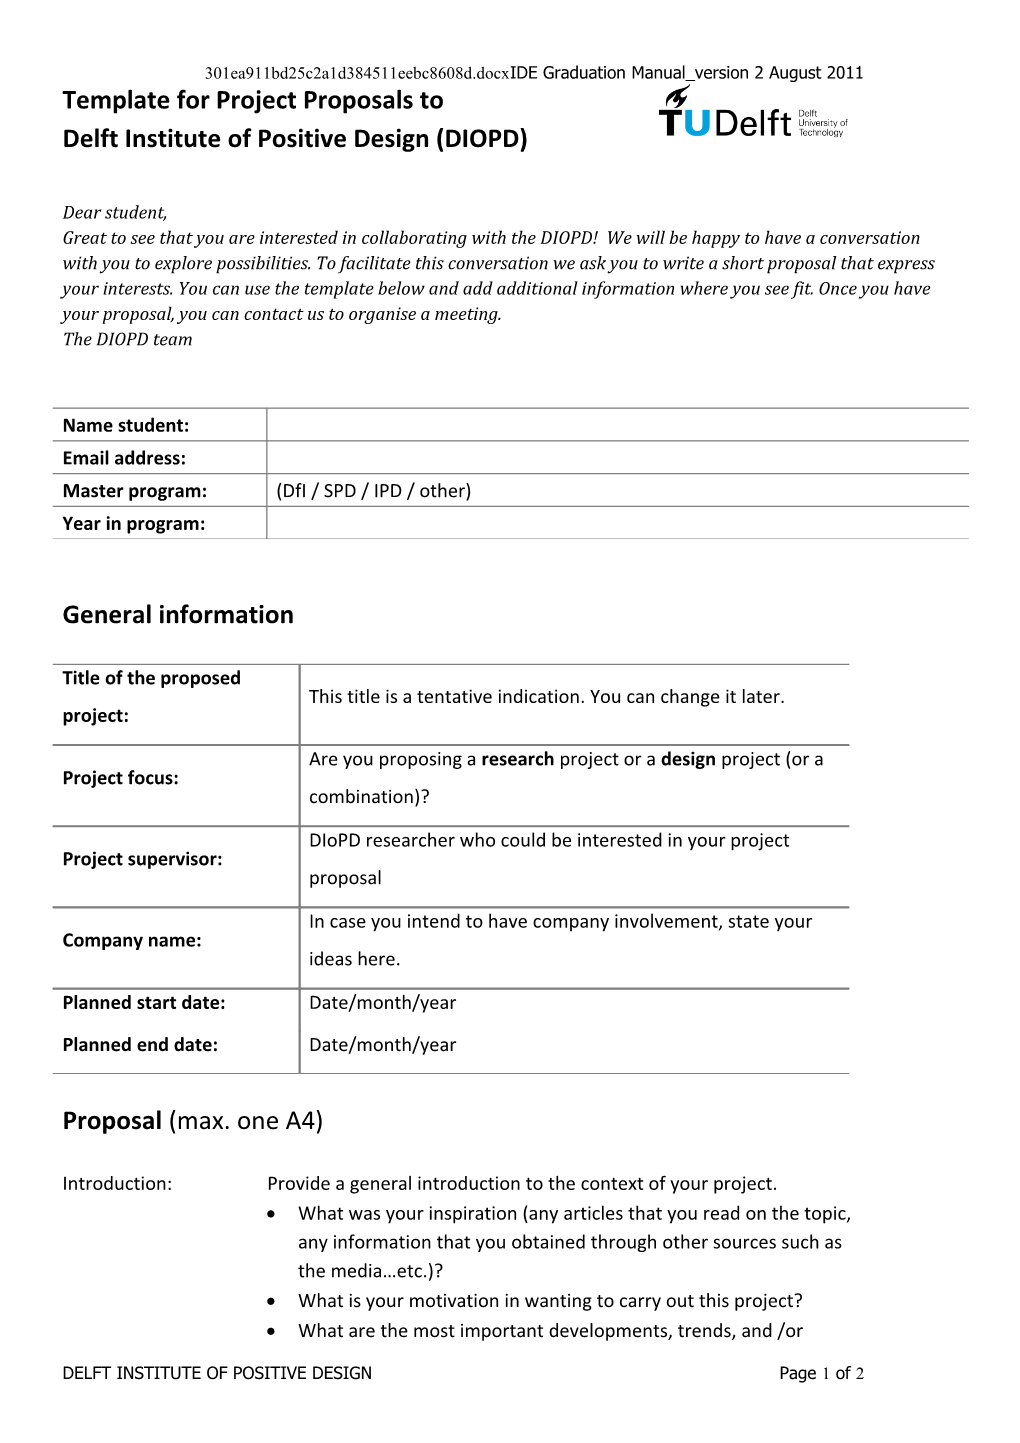 IDE Graduation Manual Version 2 August 2011